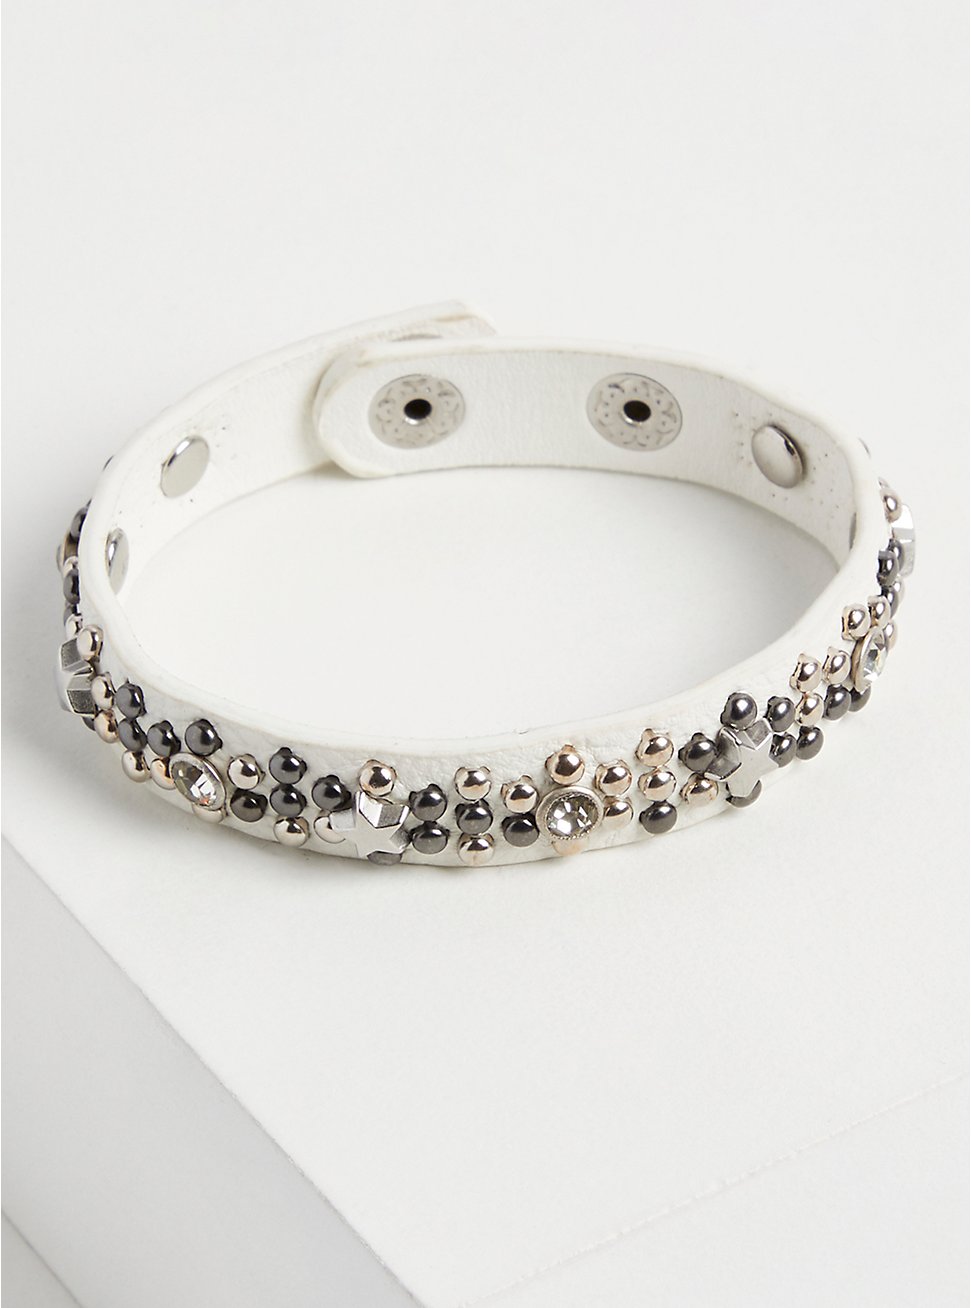 Plus Size Studded Bracelet - Faux Leather White & Silver, MULTI, hi-res